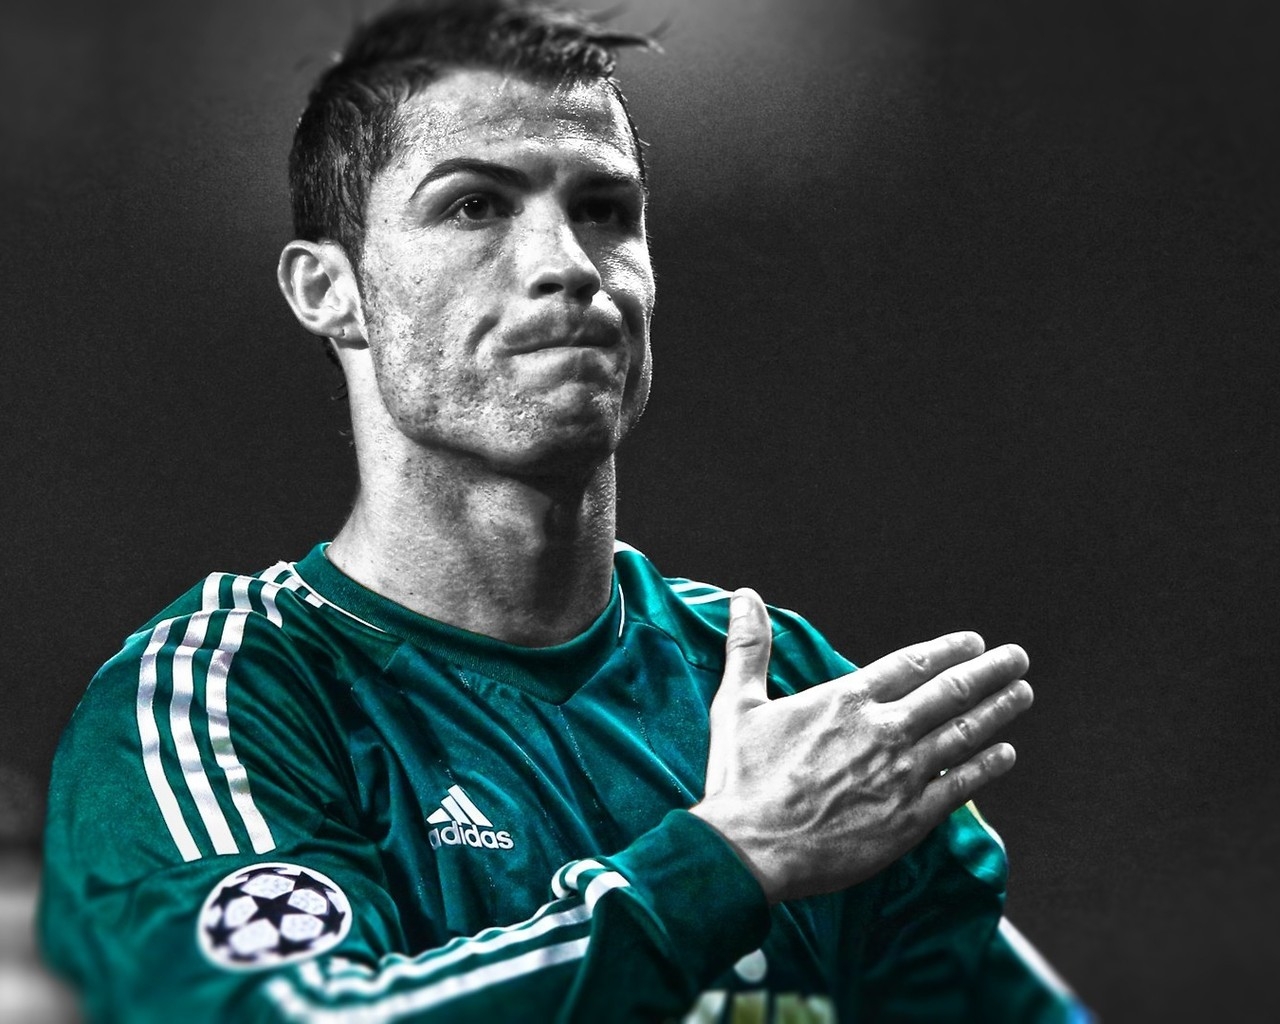 Cristiano Ronaldo Monochrome for 1280 x 1024 resolution